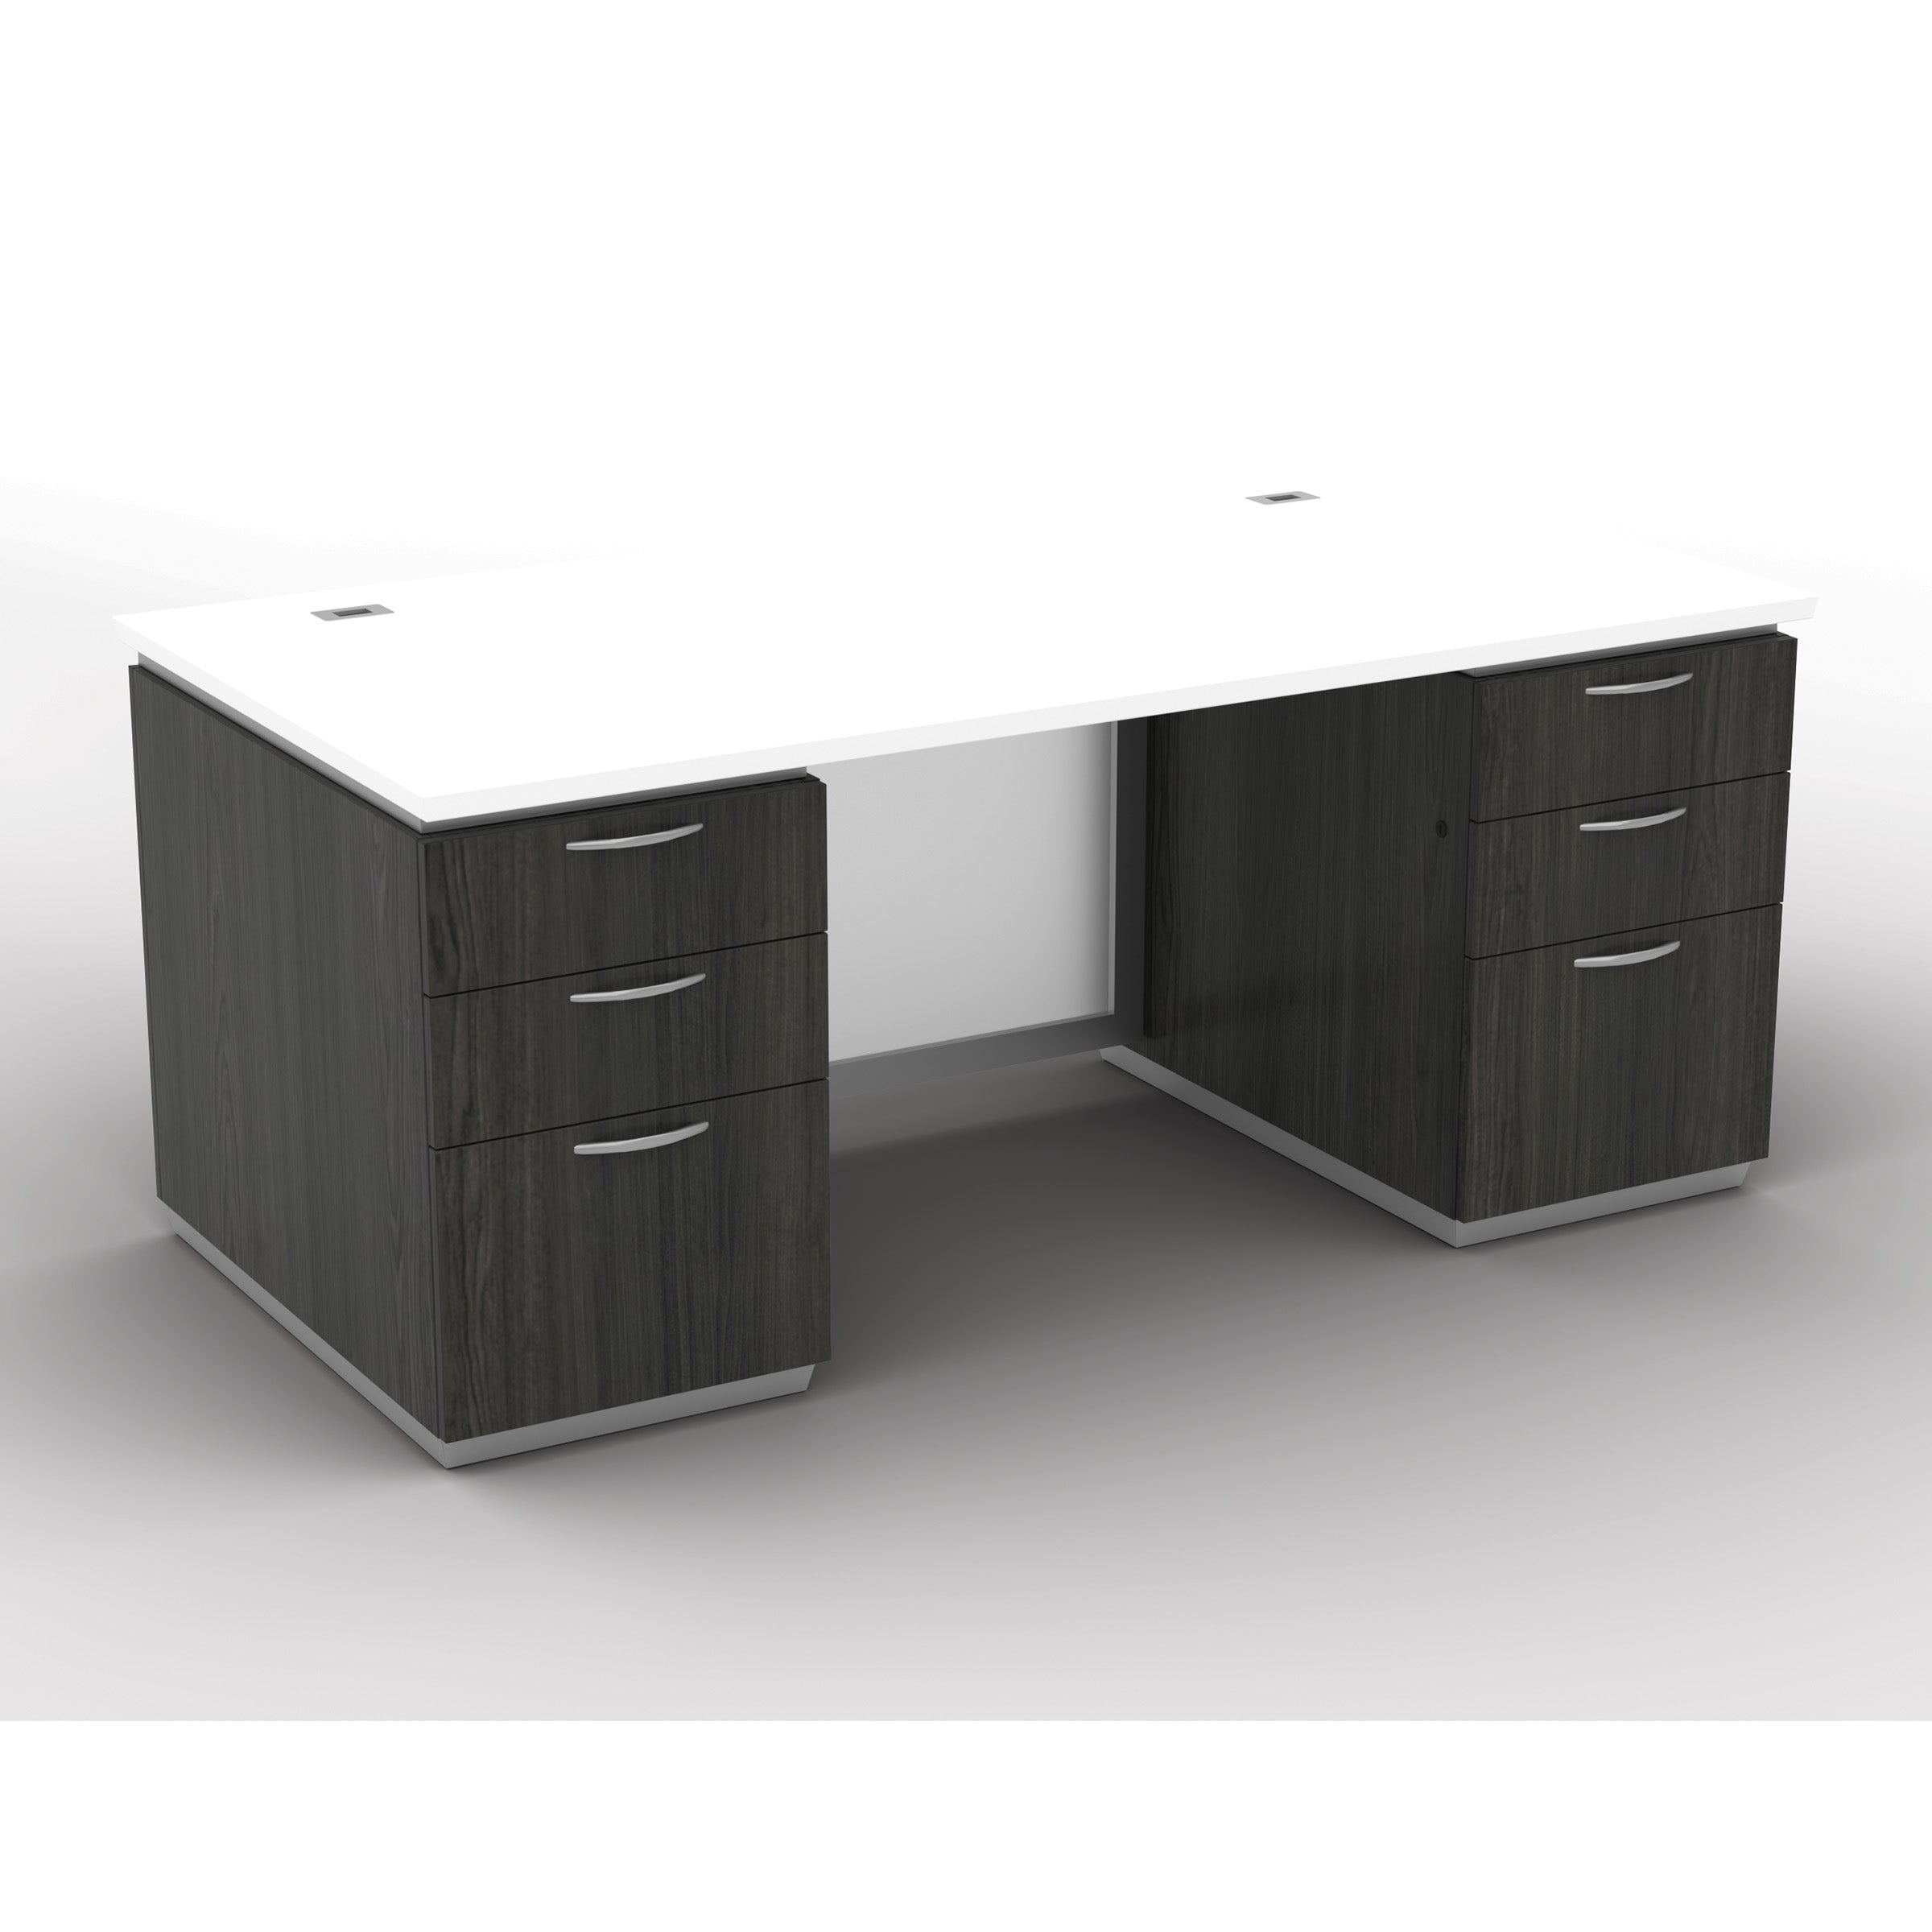 TUX-TYP2 - Tuxedo 72" Double Pedestal Desk by OSP